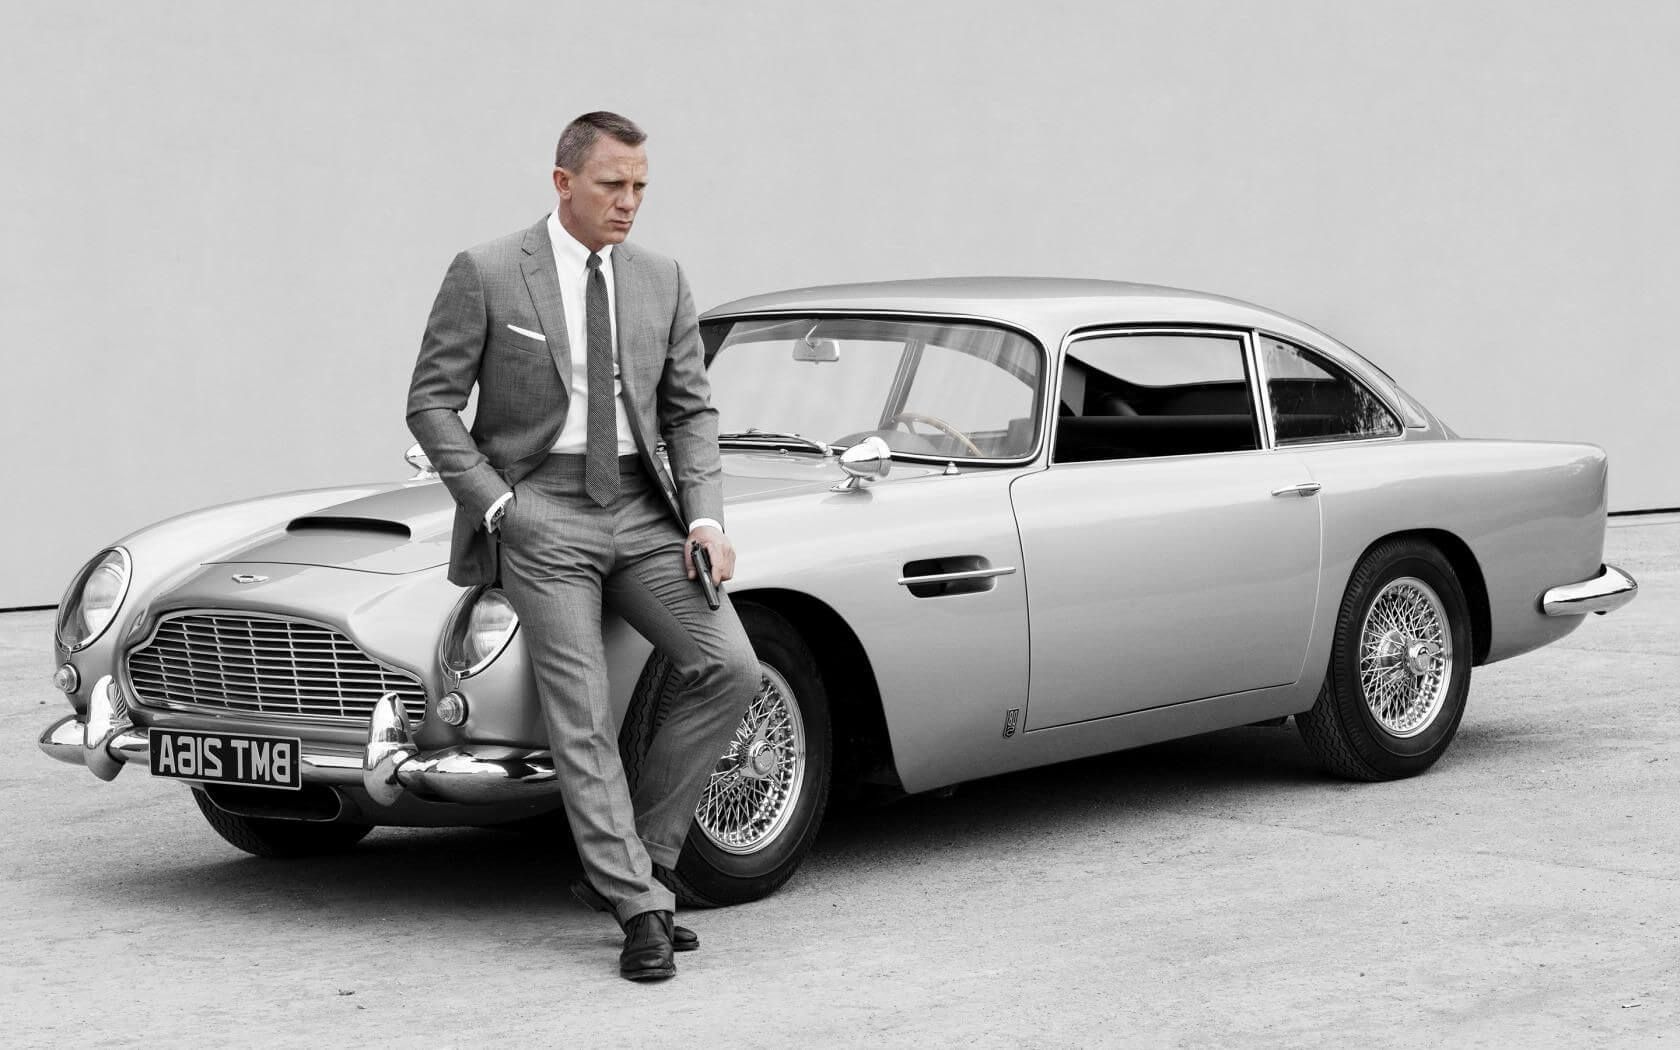 James Bond actor Daniel Craig sits on the iconic Aston Martin DB5